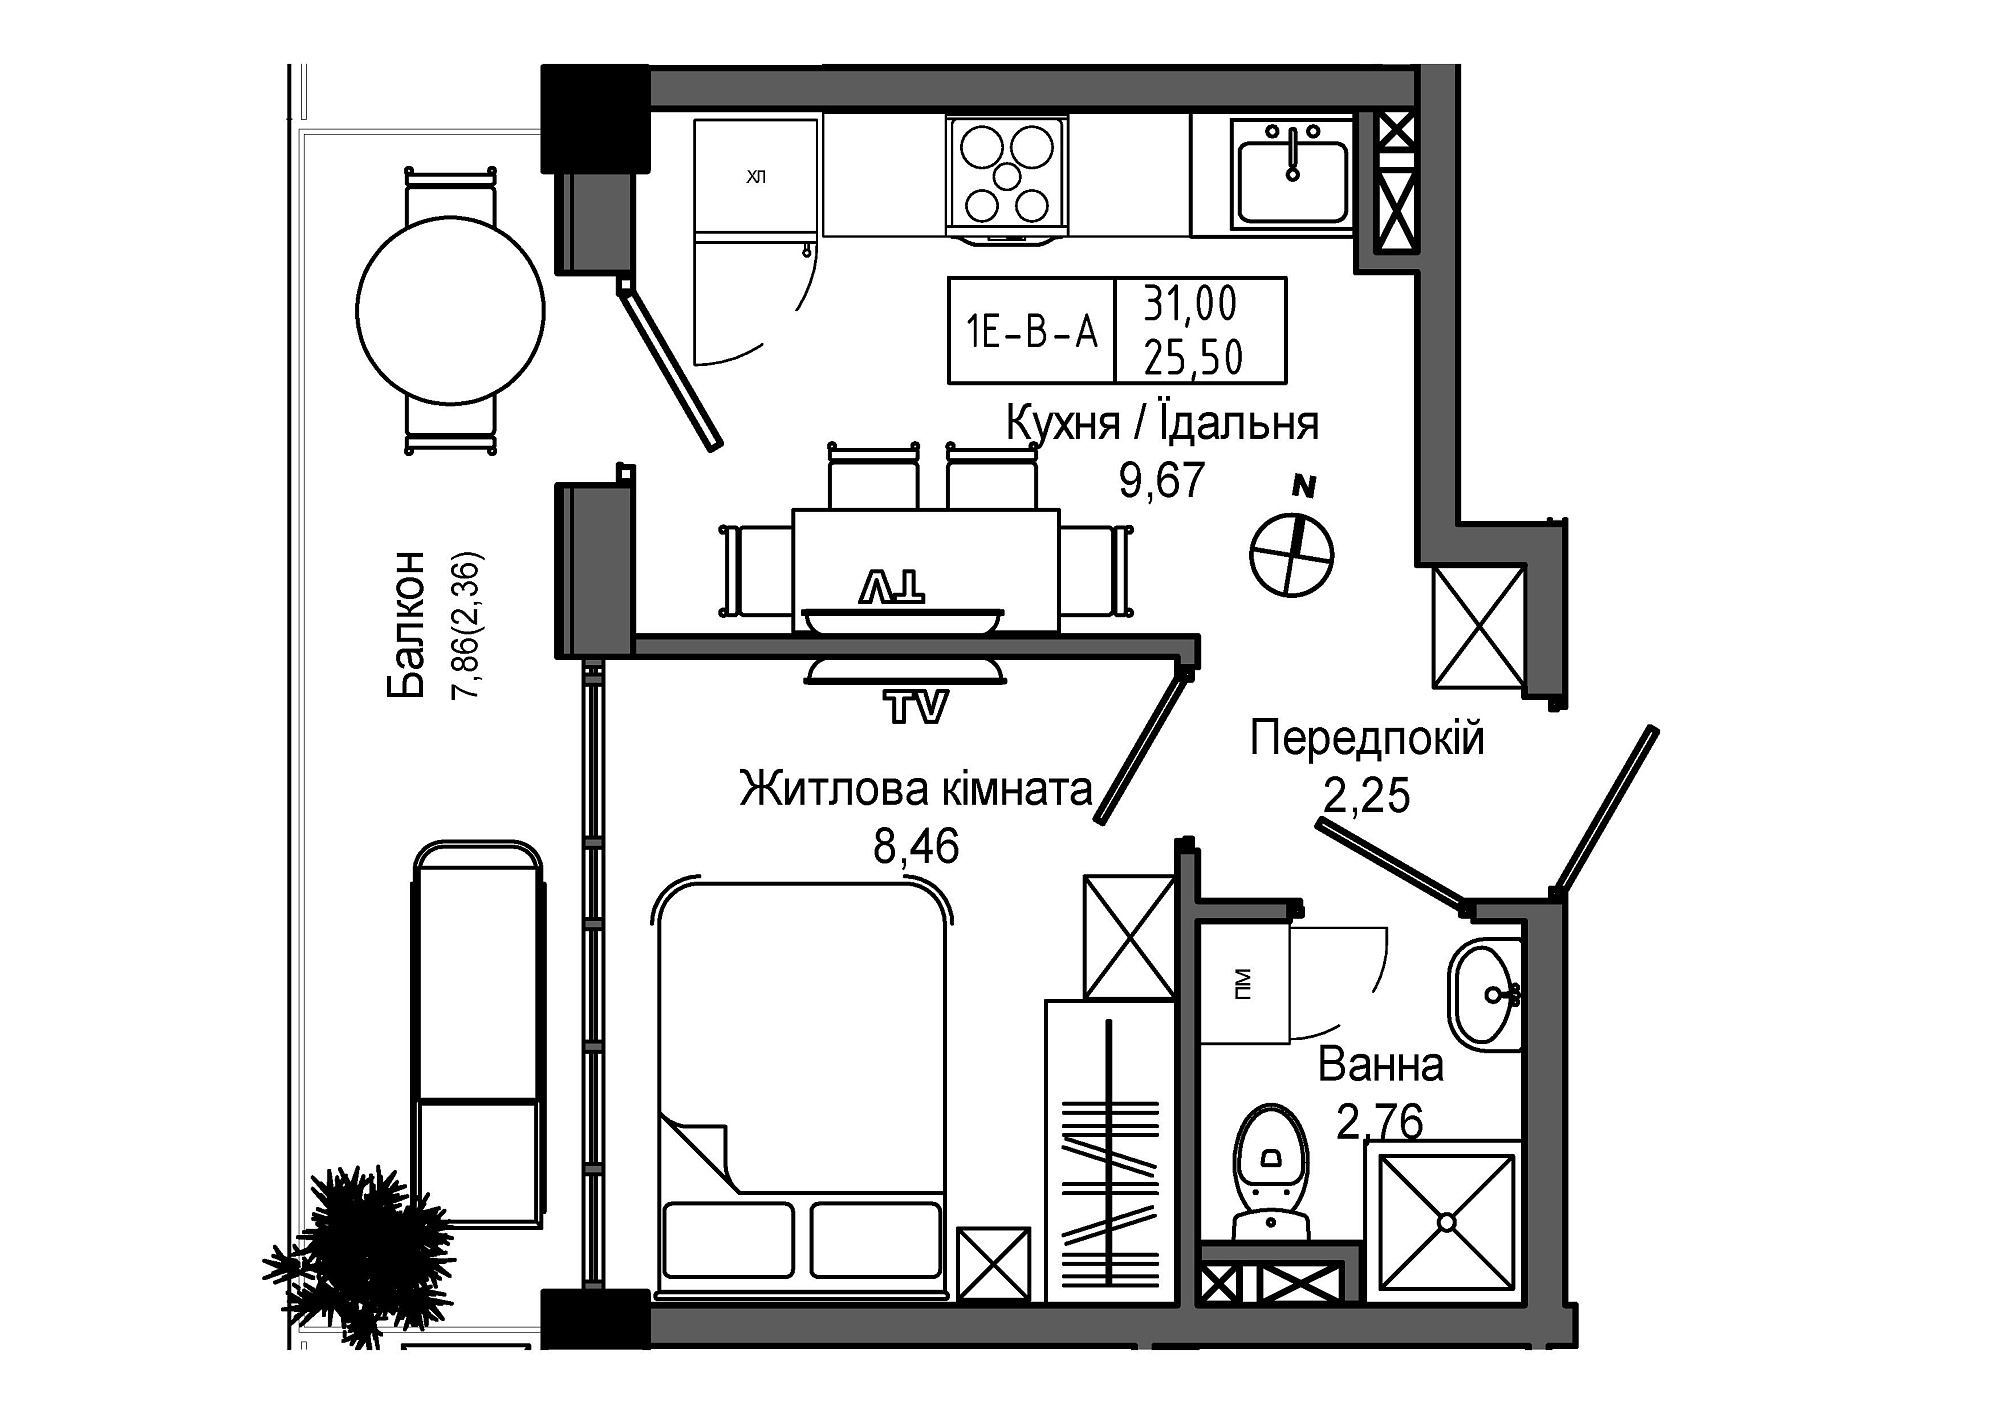 Планування 1-к квартира площею 25.5м2, UM-006-02/0008.